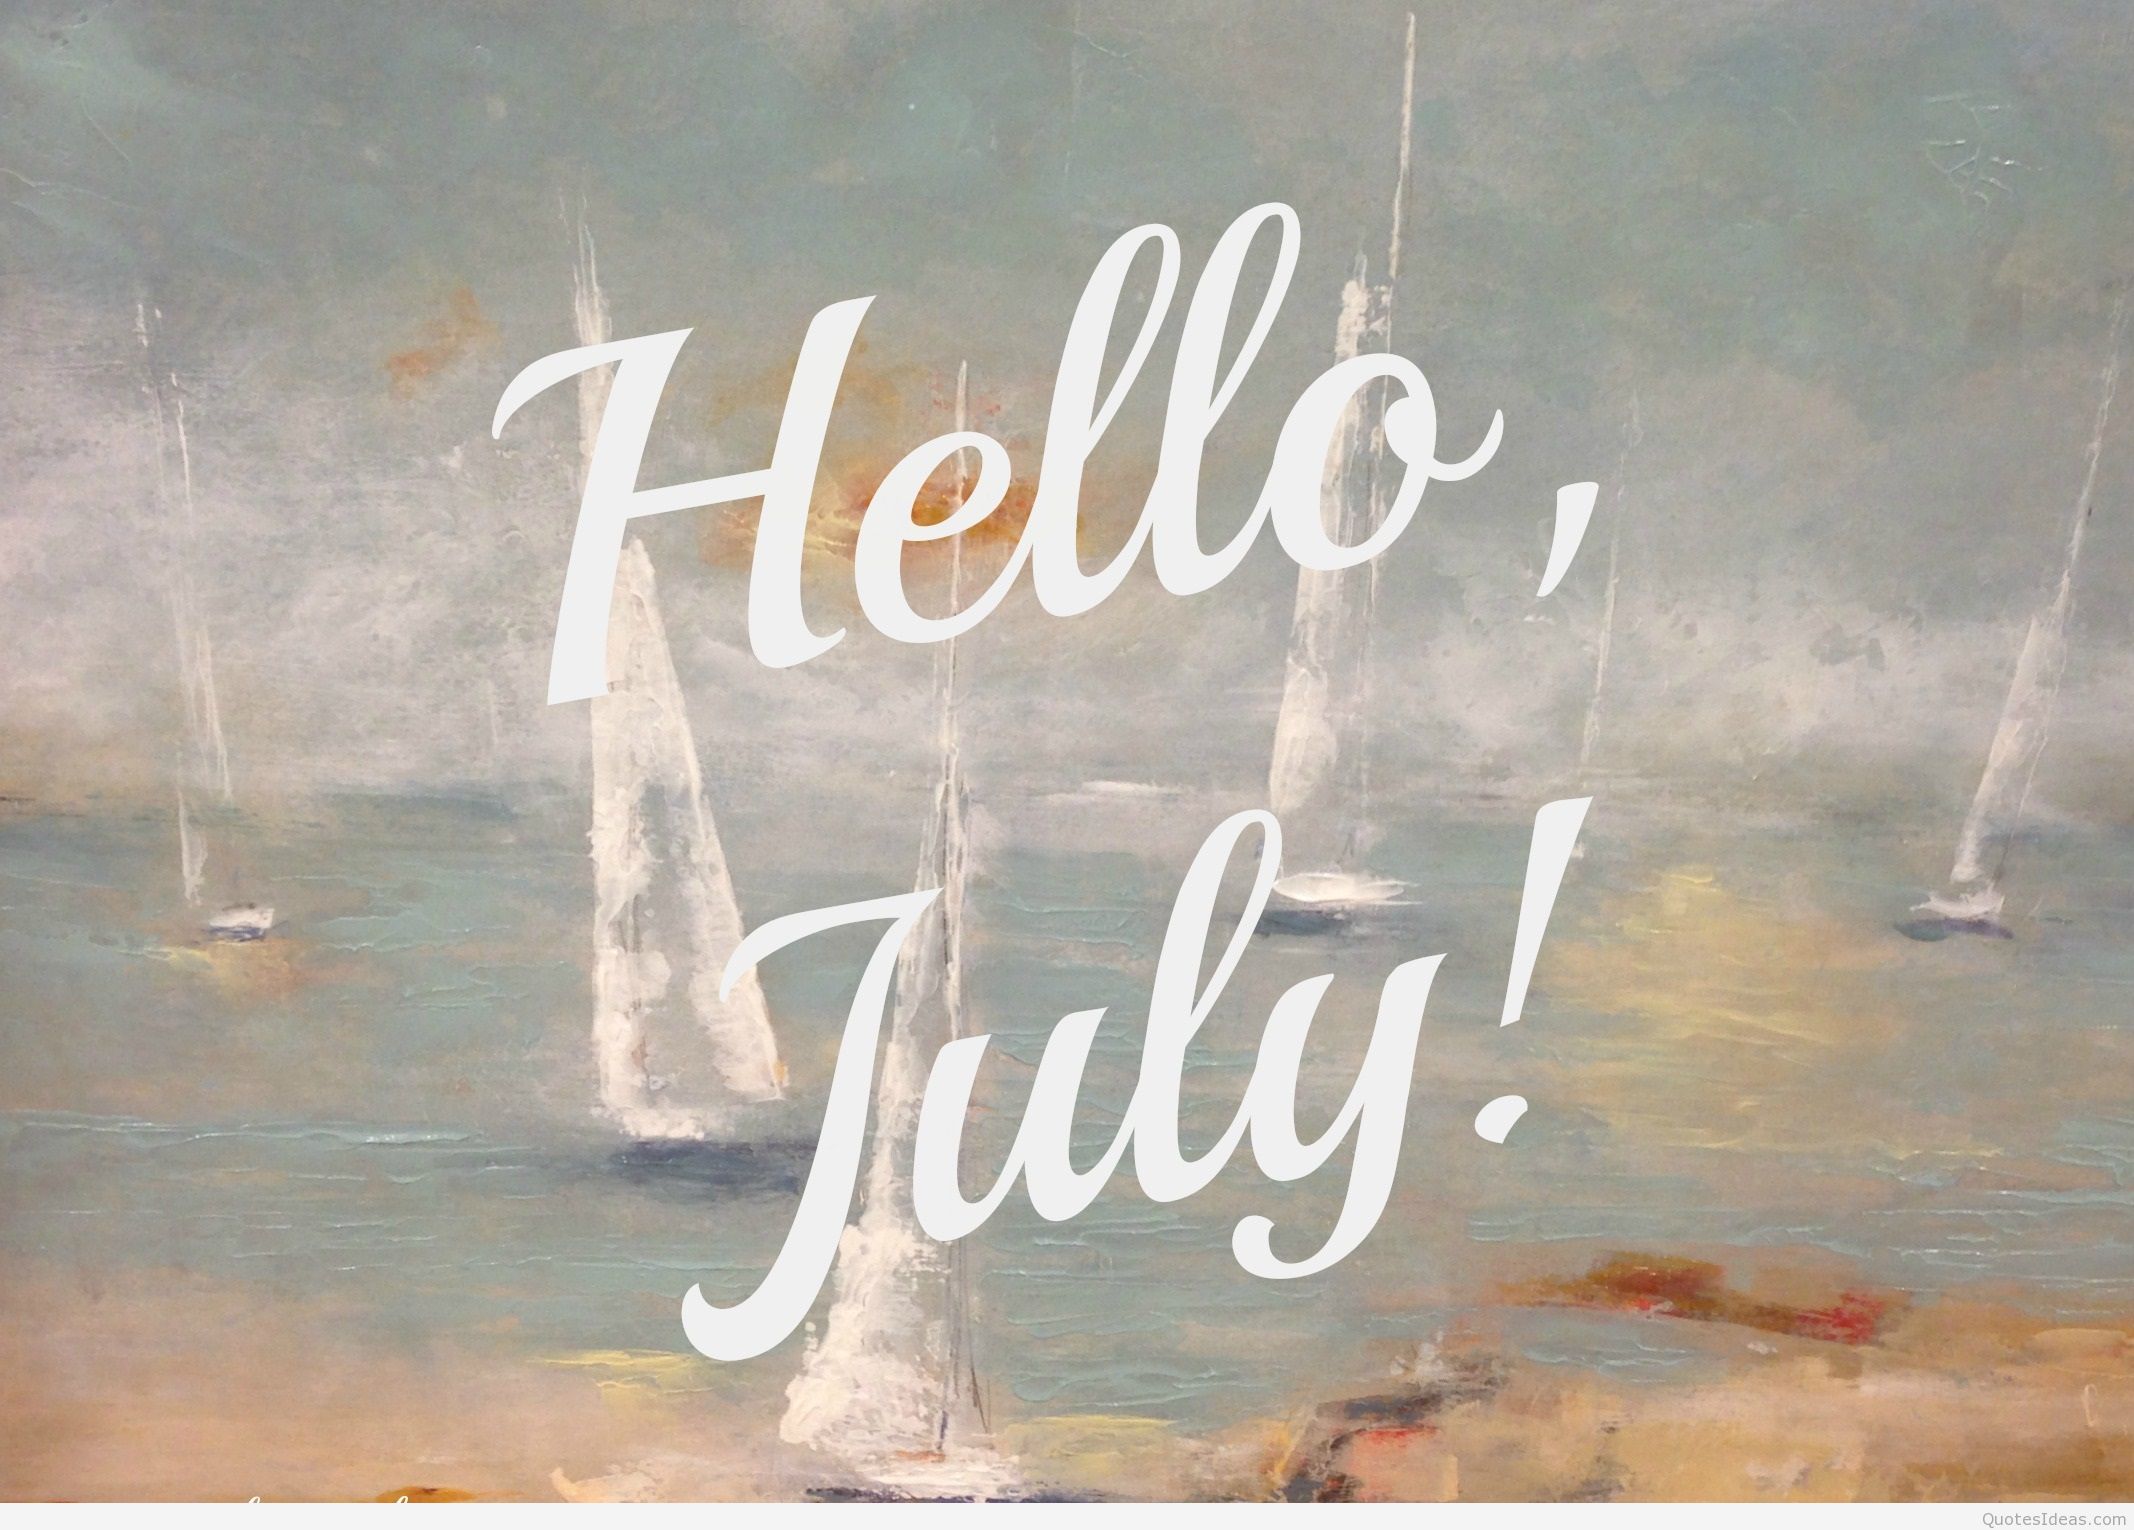 Hello-July